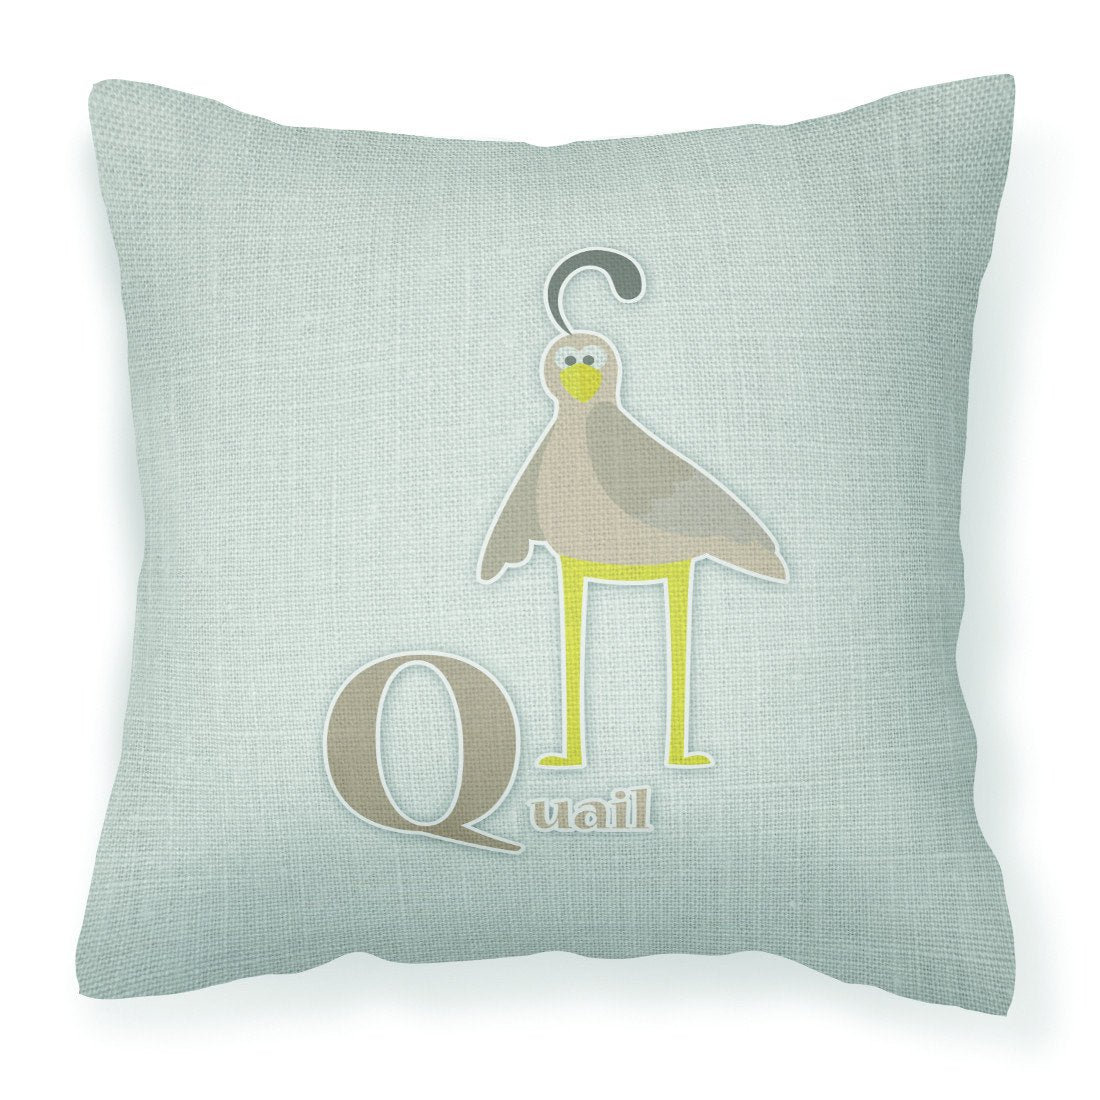 Alphabet Q for Quail Fabric Decorative Pillow BB5742PW1818 by Caroline's Treasures